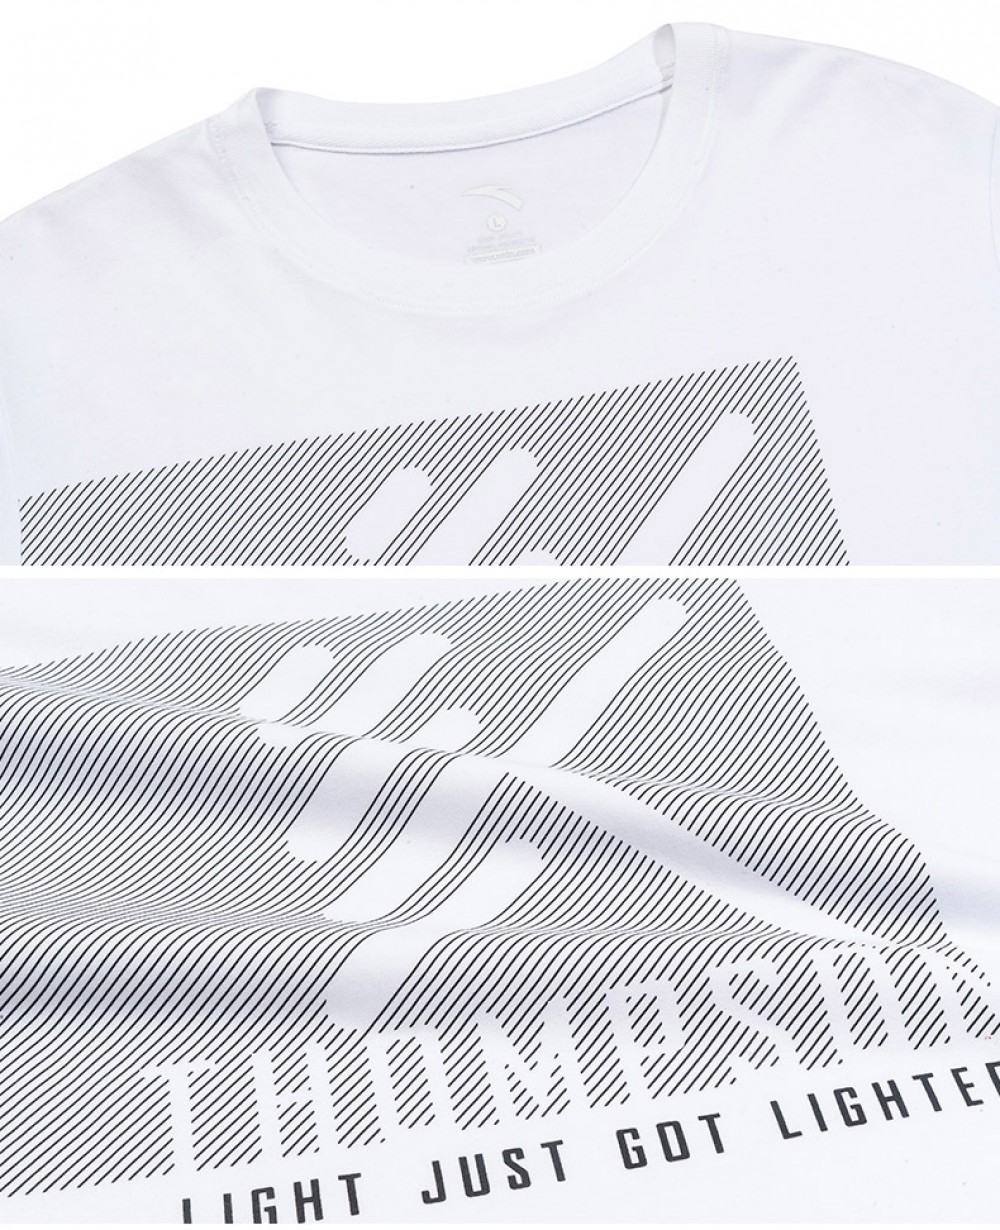 Klay Thompson Wearing 4nta Shirt